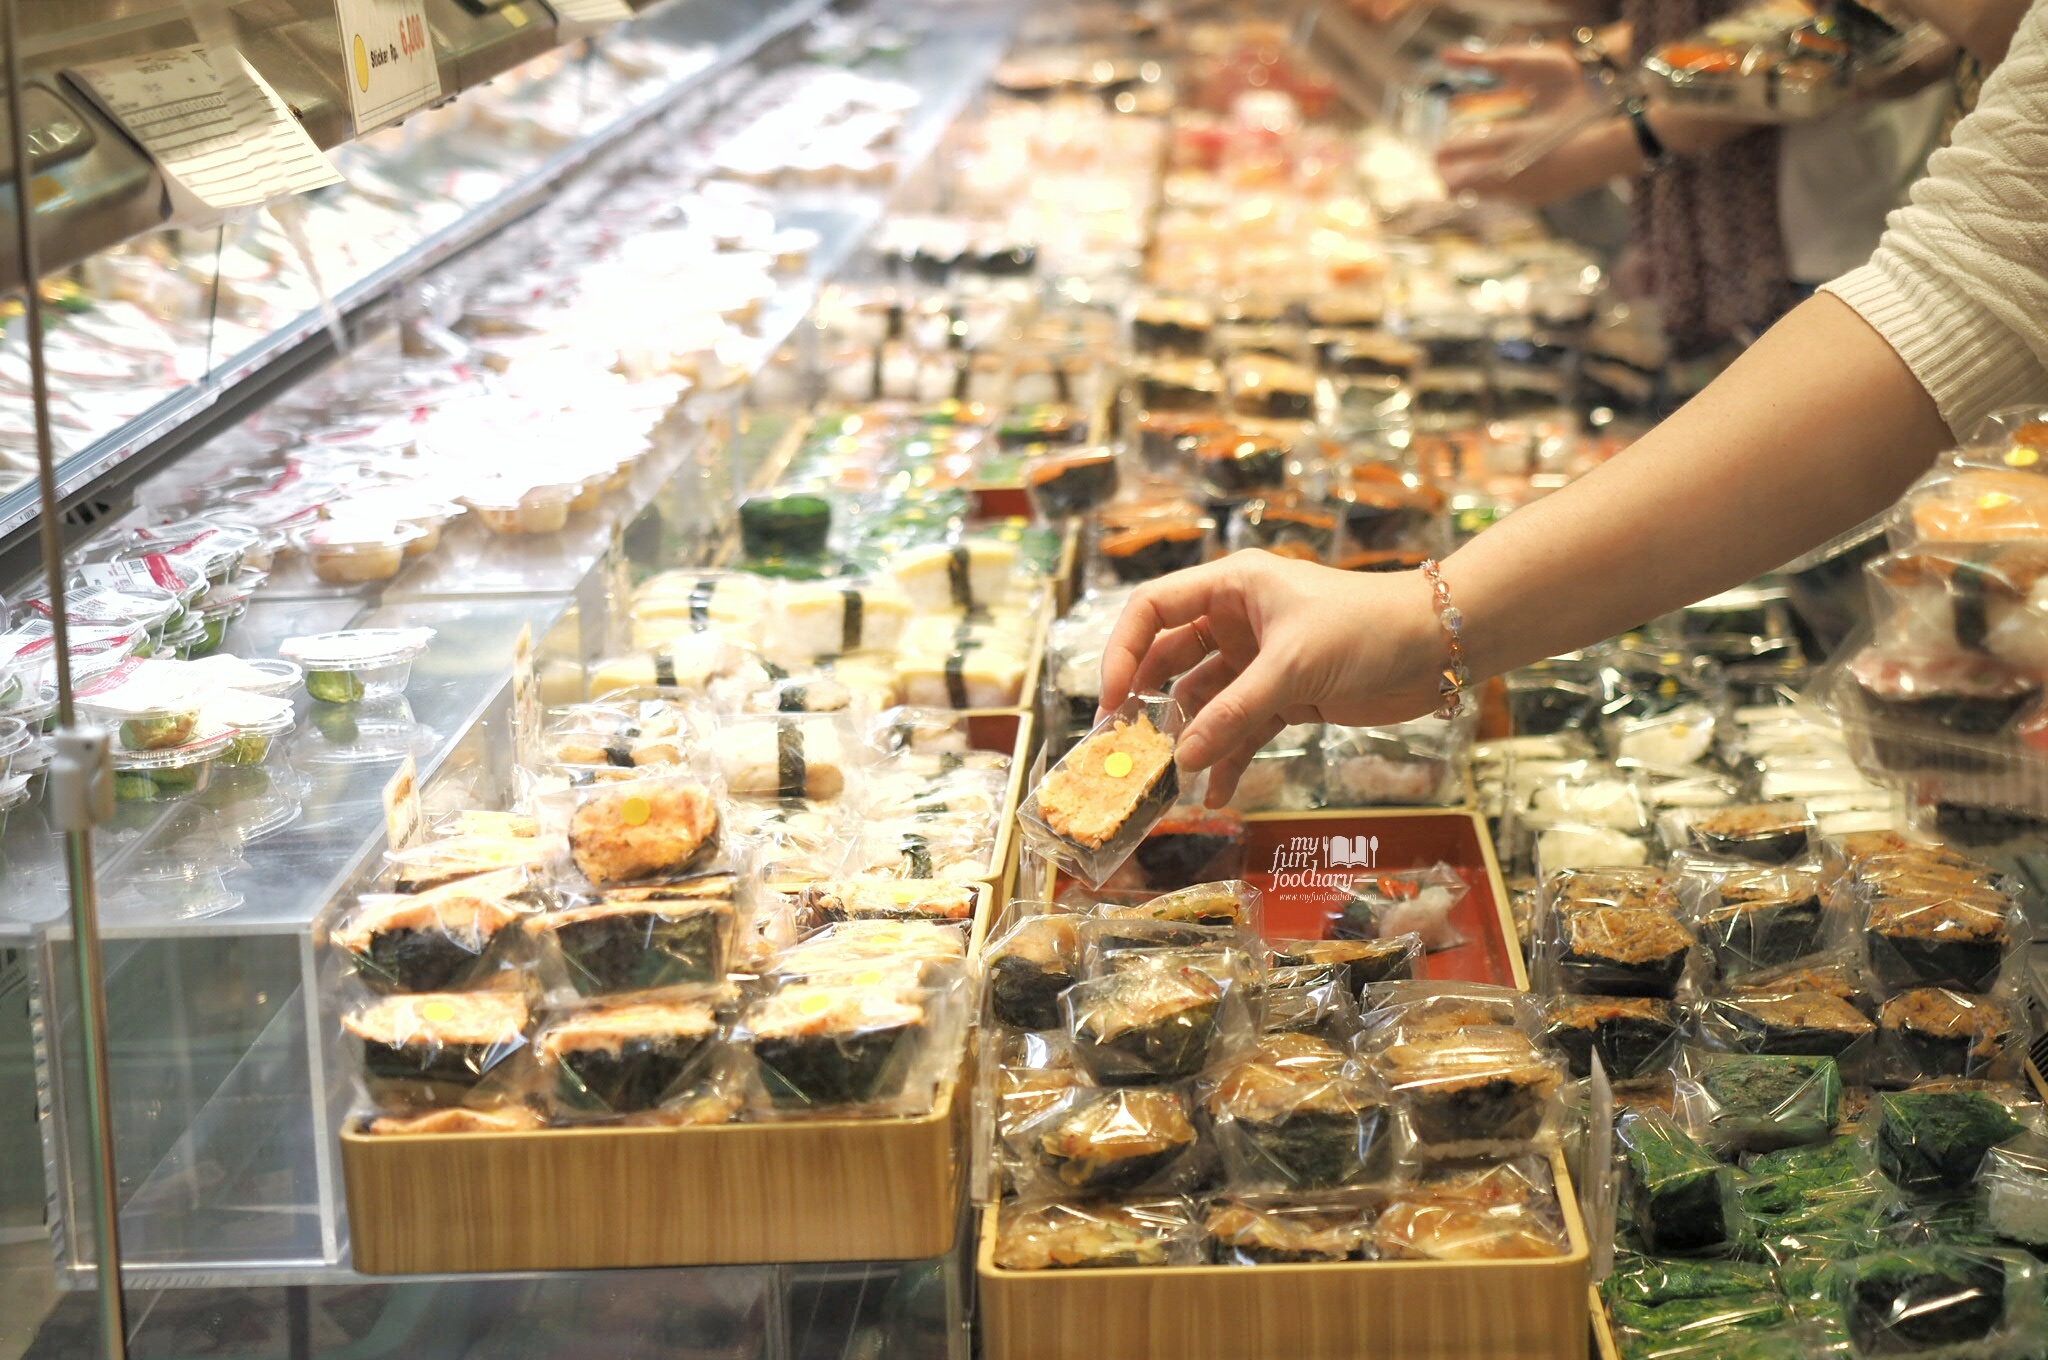 Hunting Sushi and Sashimi at Sushi and Bento Counter AEON Mall by Myfunfoodiary